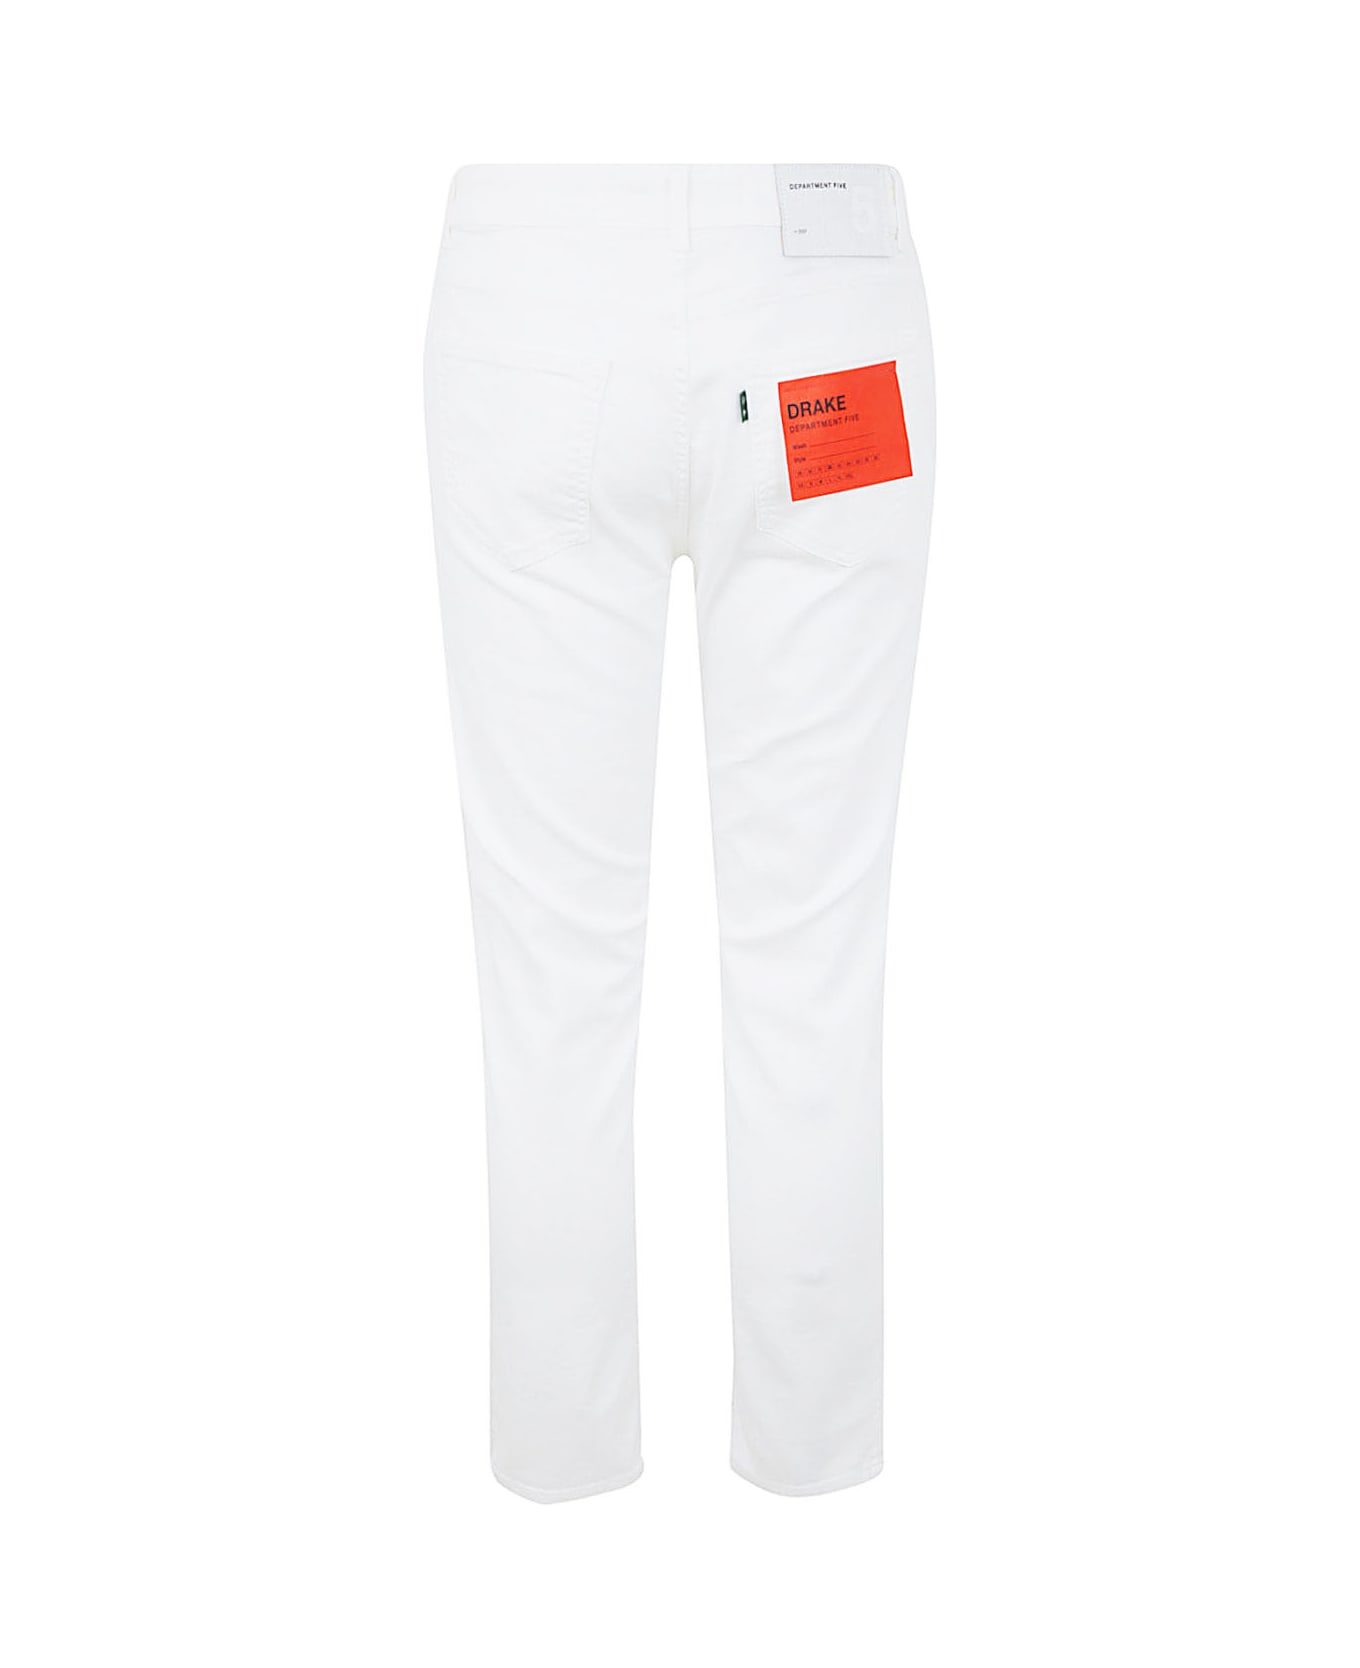 Department Five Drake Skinny Jeans - White